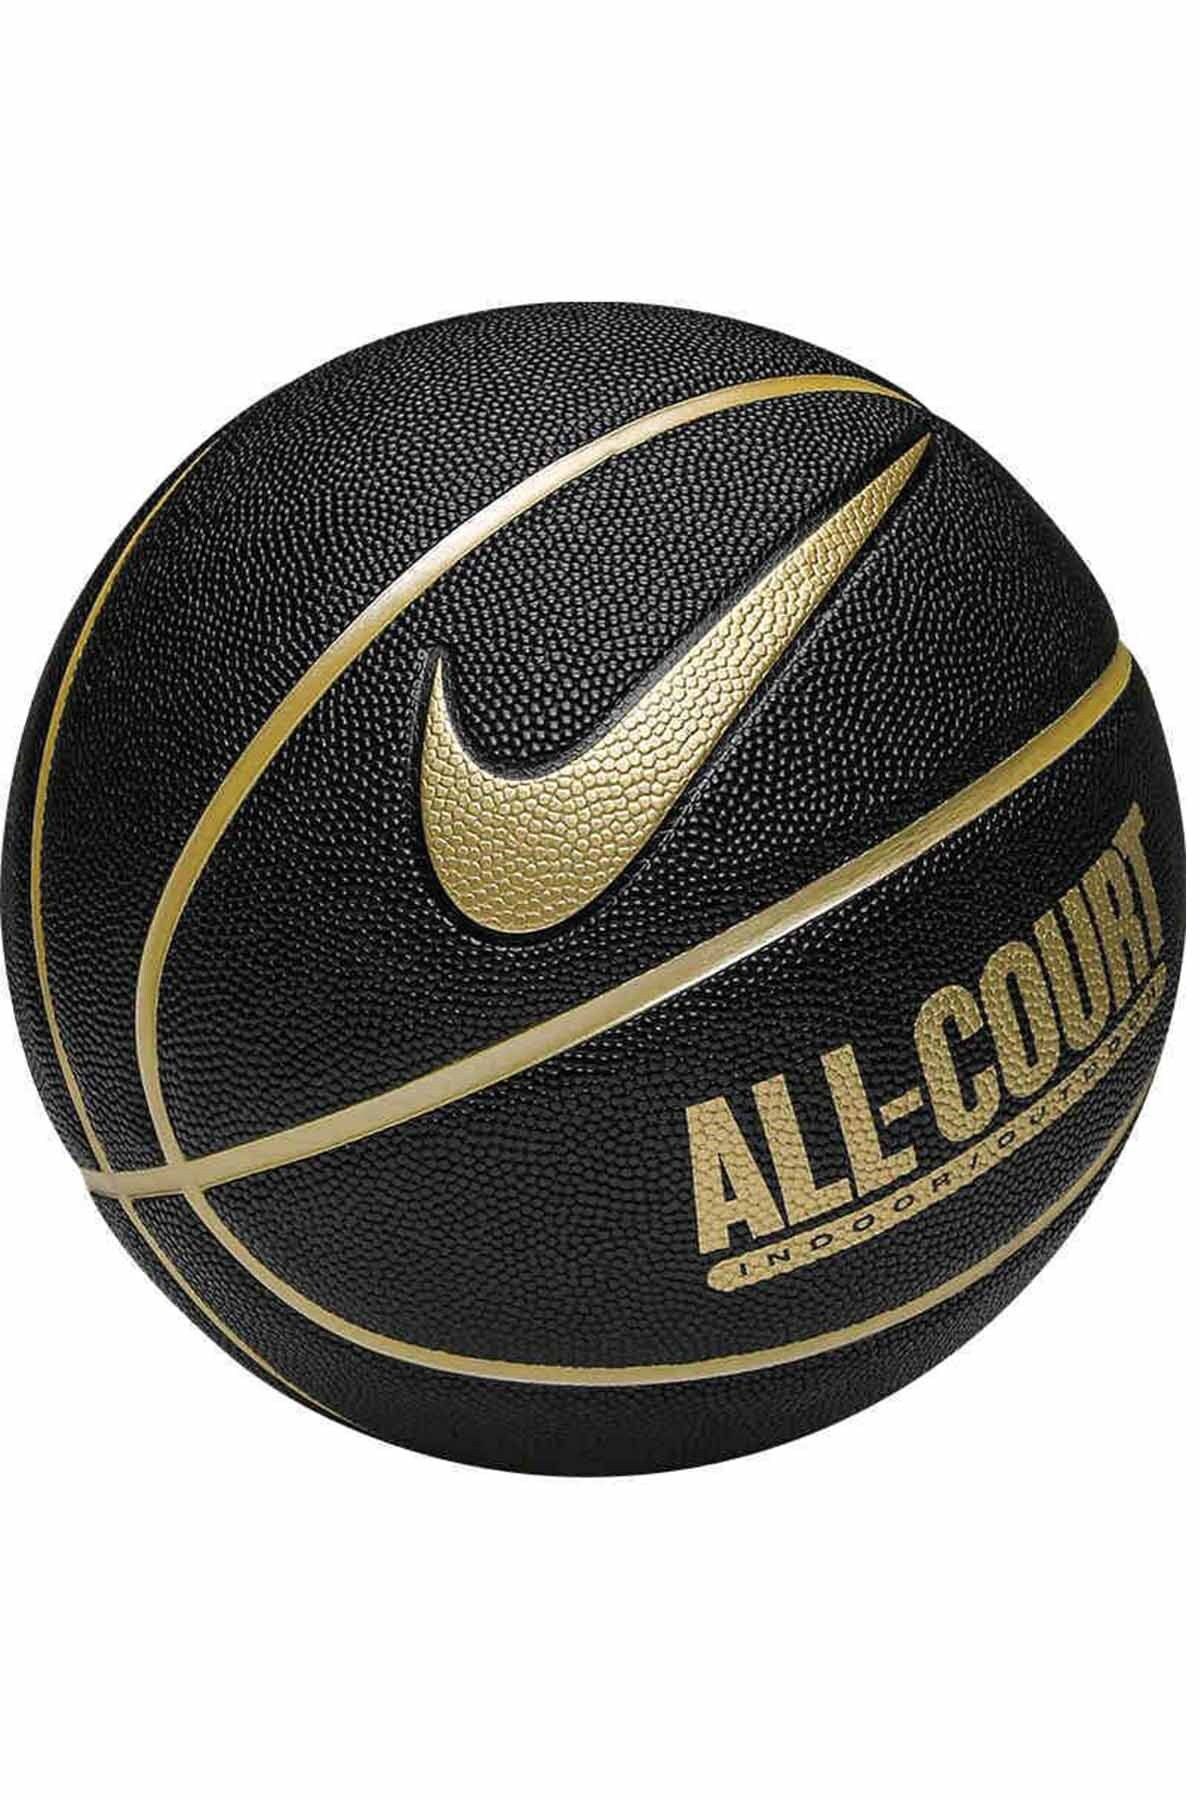 Nike Everyday All Court 8p Unisex Basketbol Topu N.100.4369.070.07-siyah